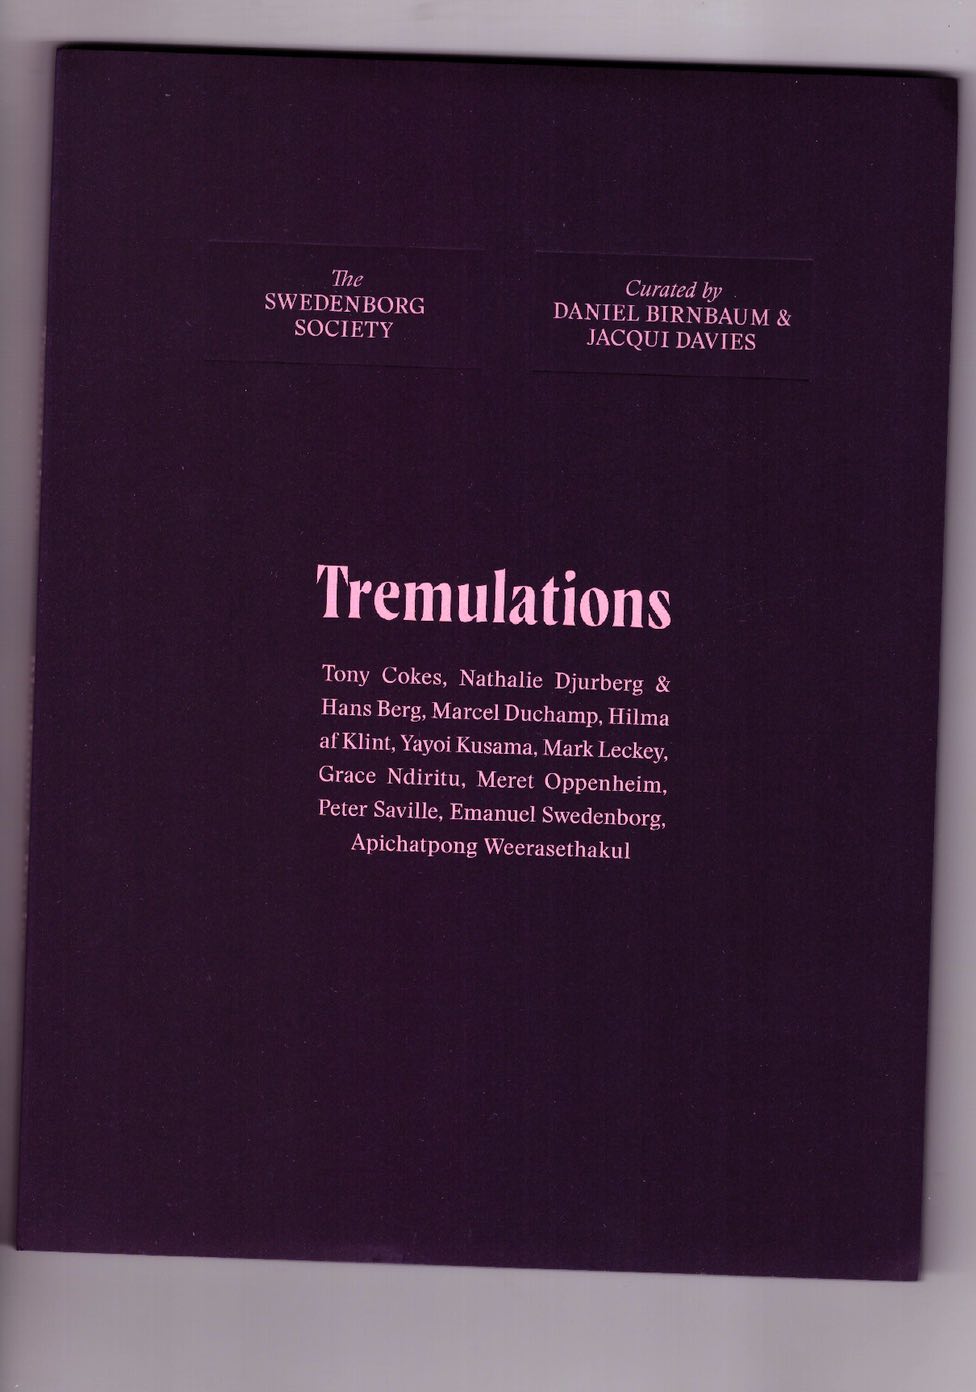 BIRNBAUM, Daniel; DAVIES, Jacqui (eds.) - Tremulations